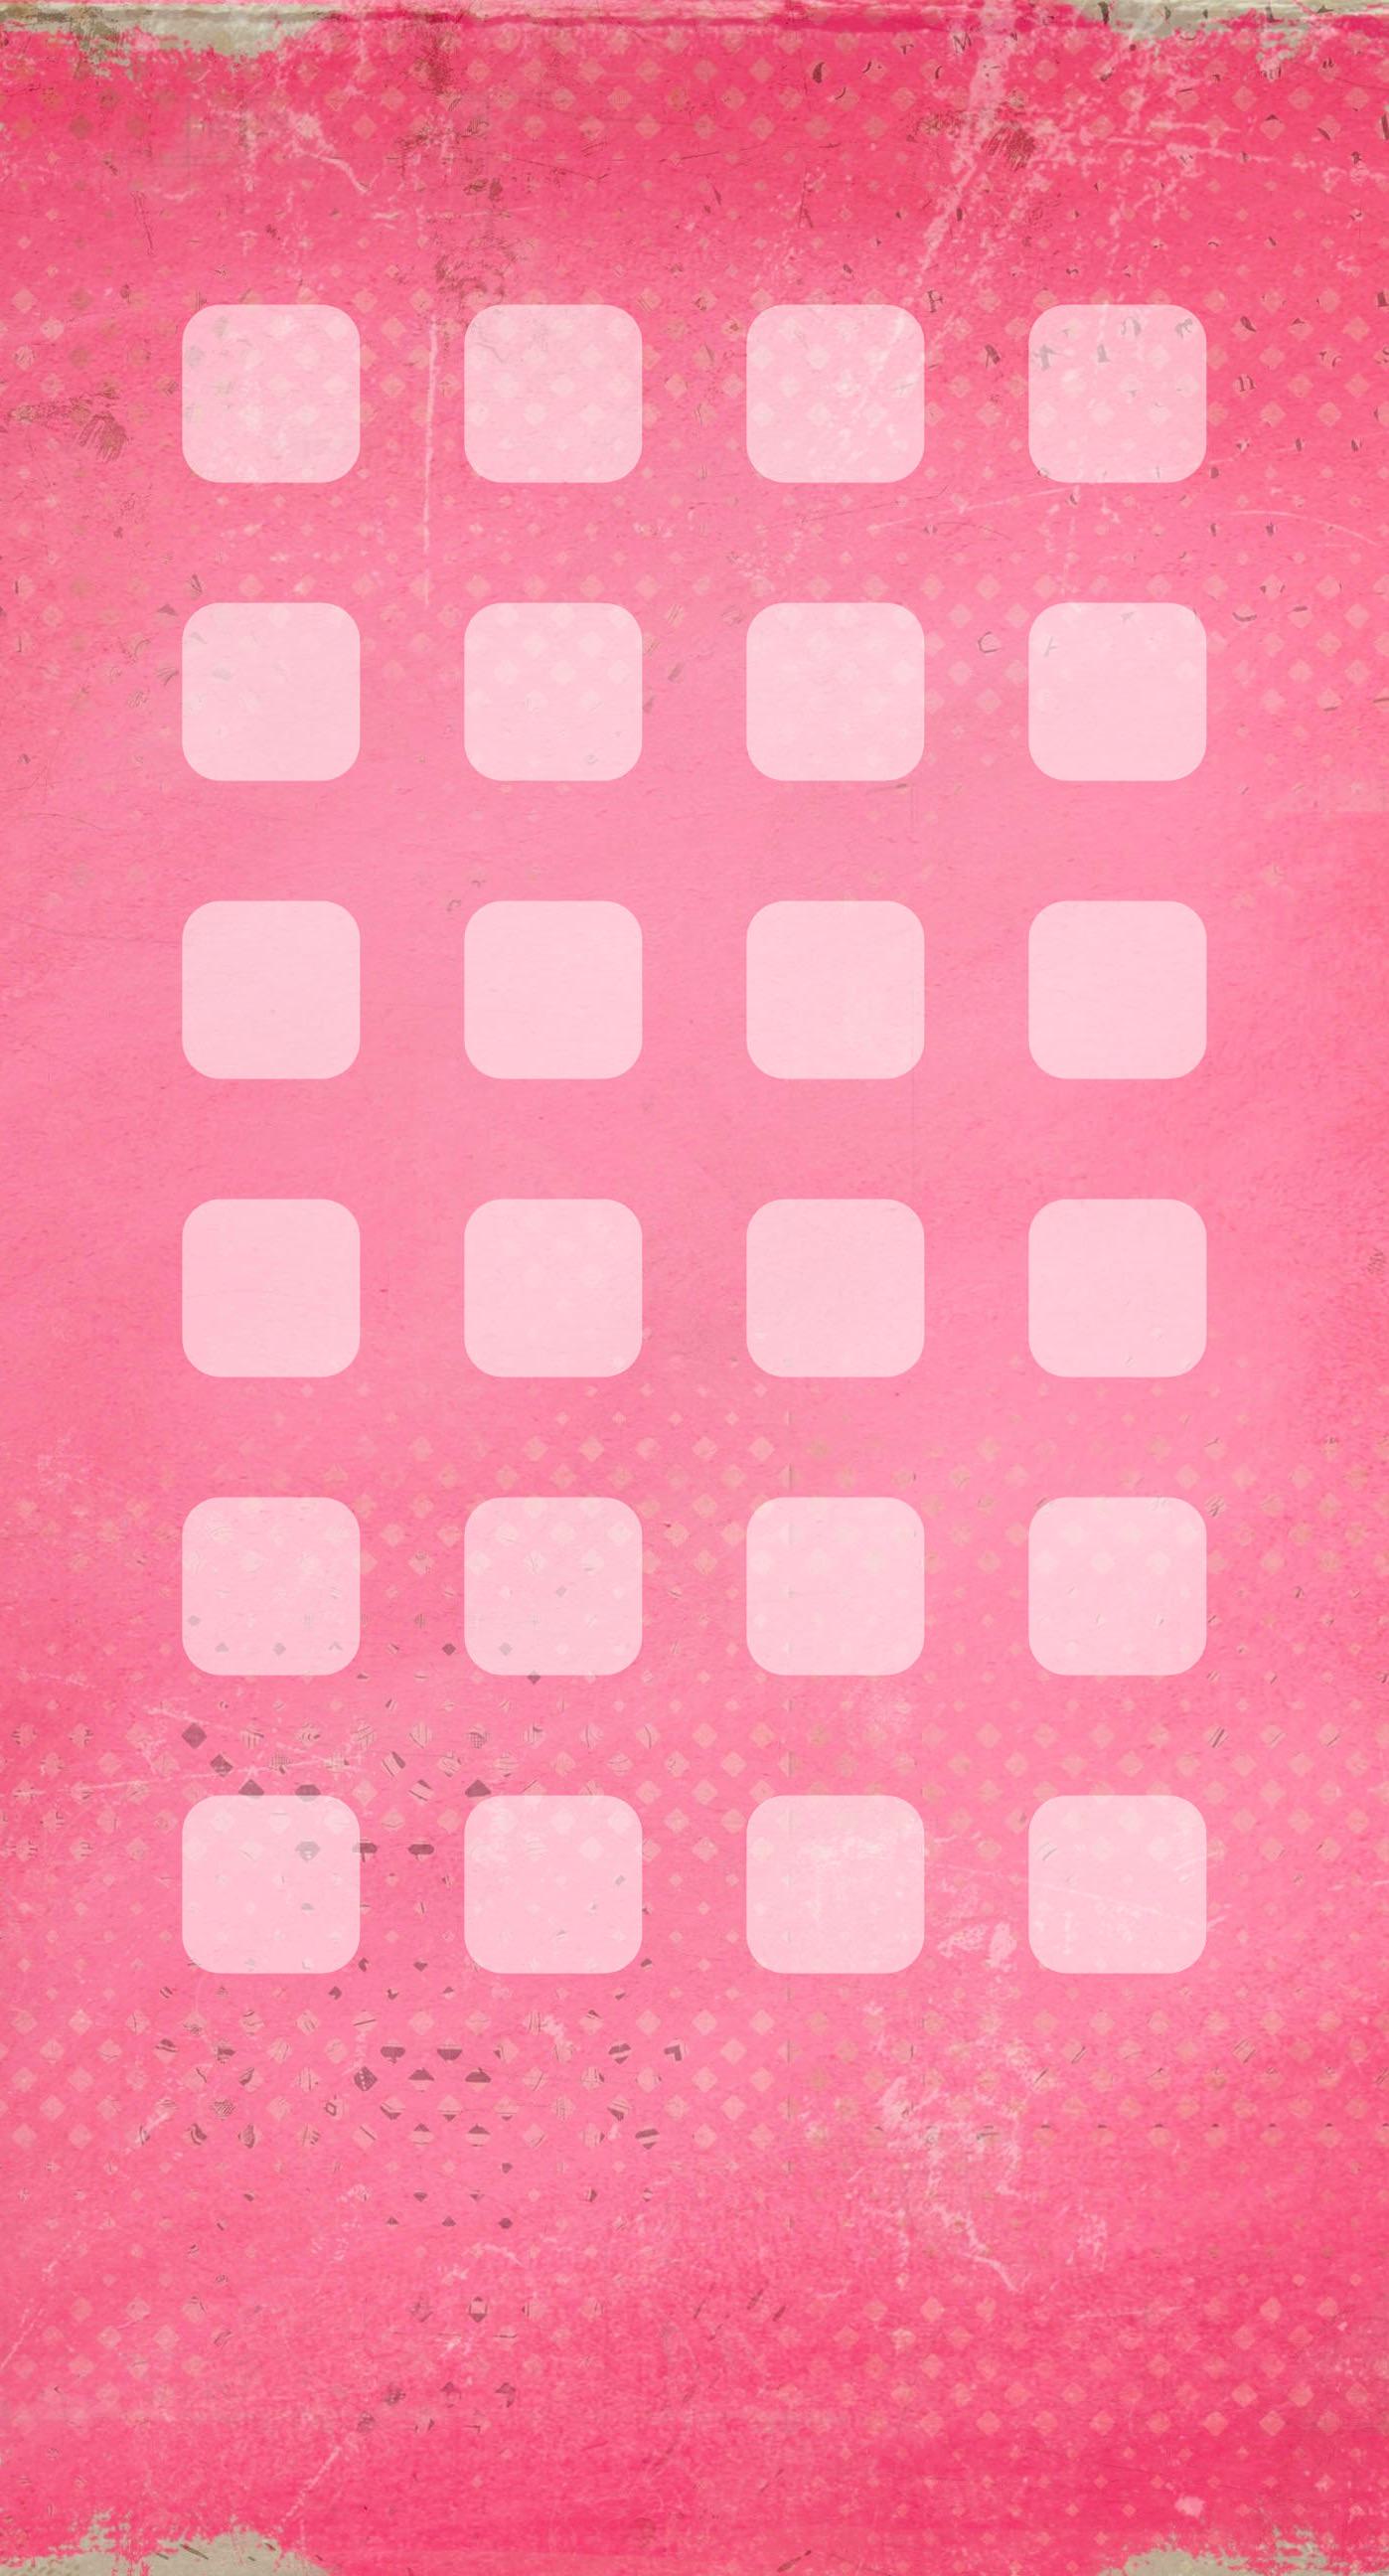 iPhone 7 Plus wallpaper